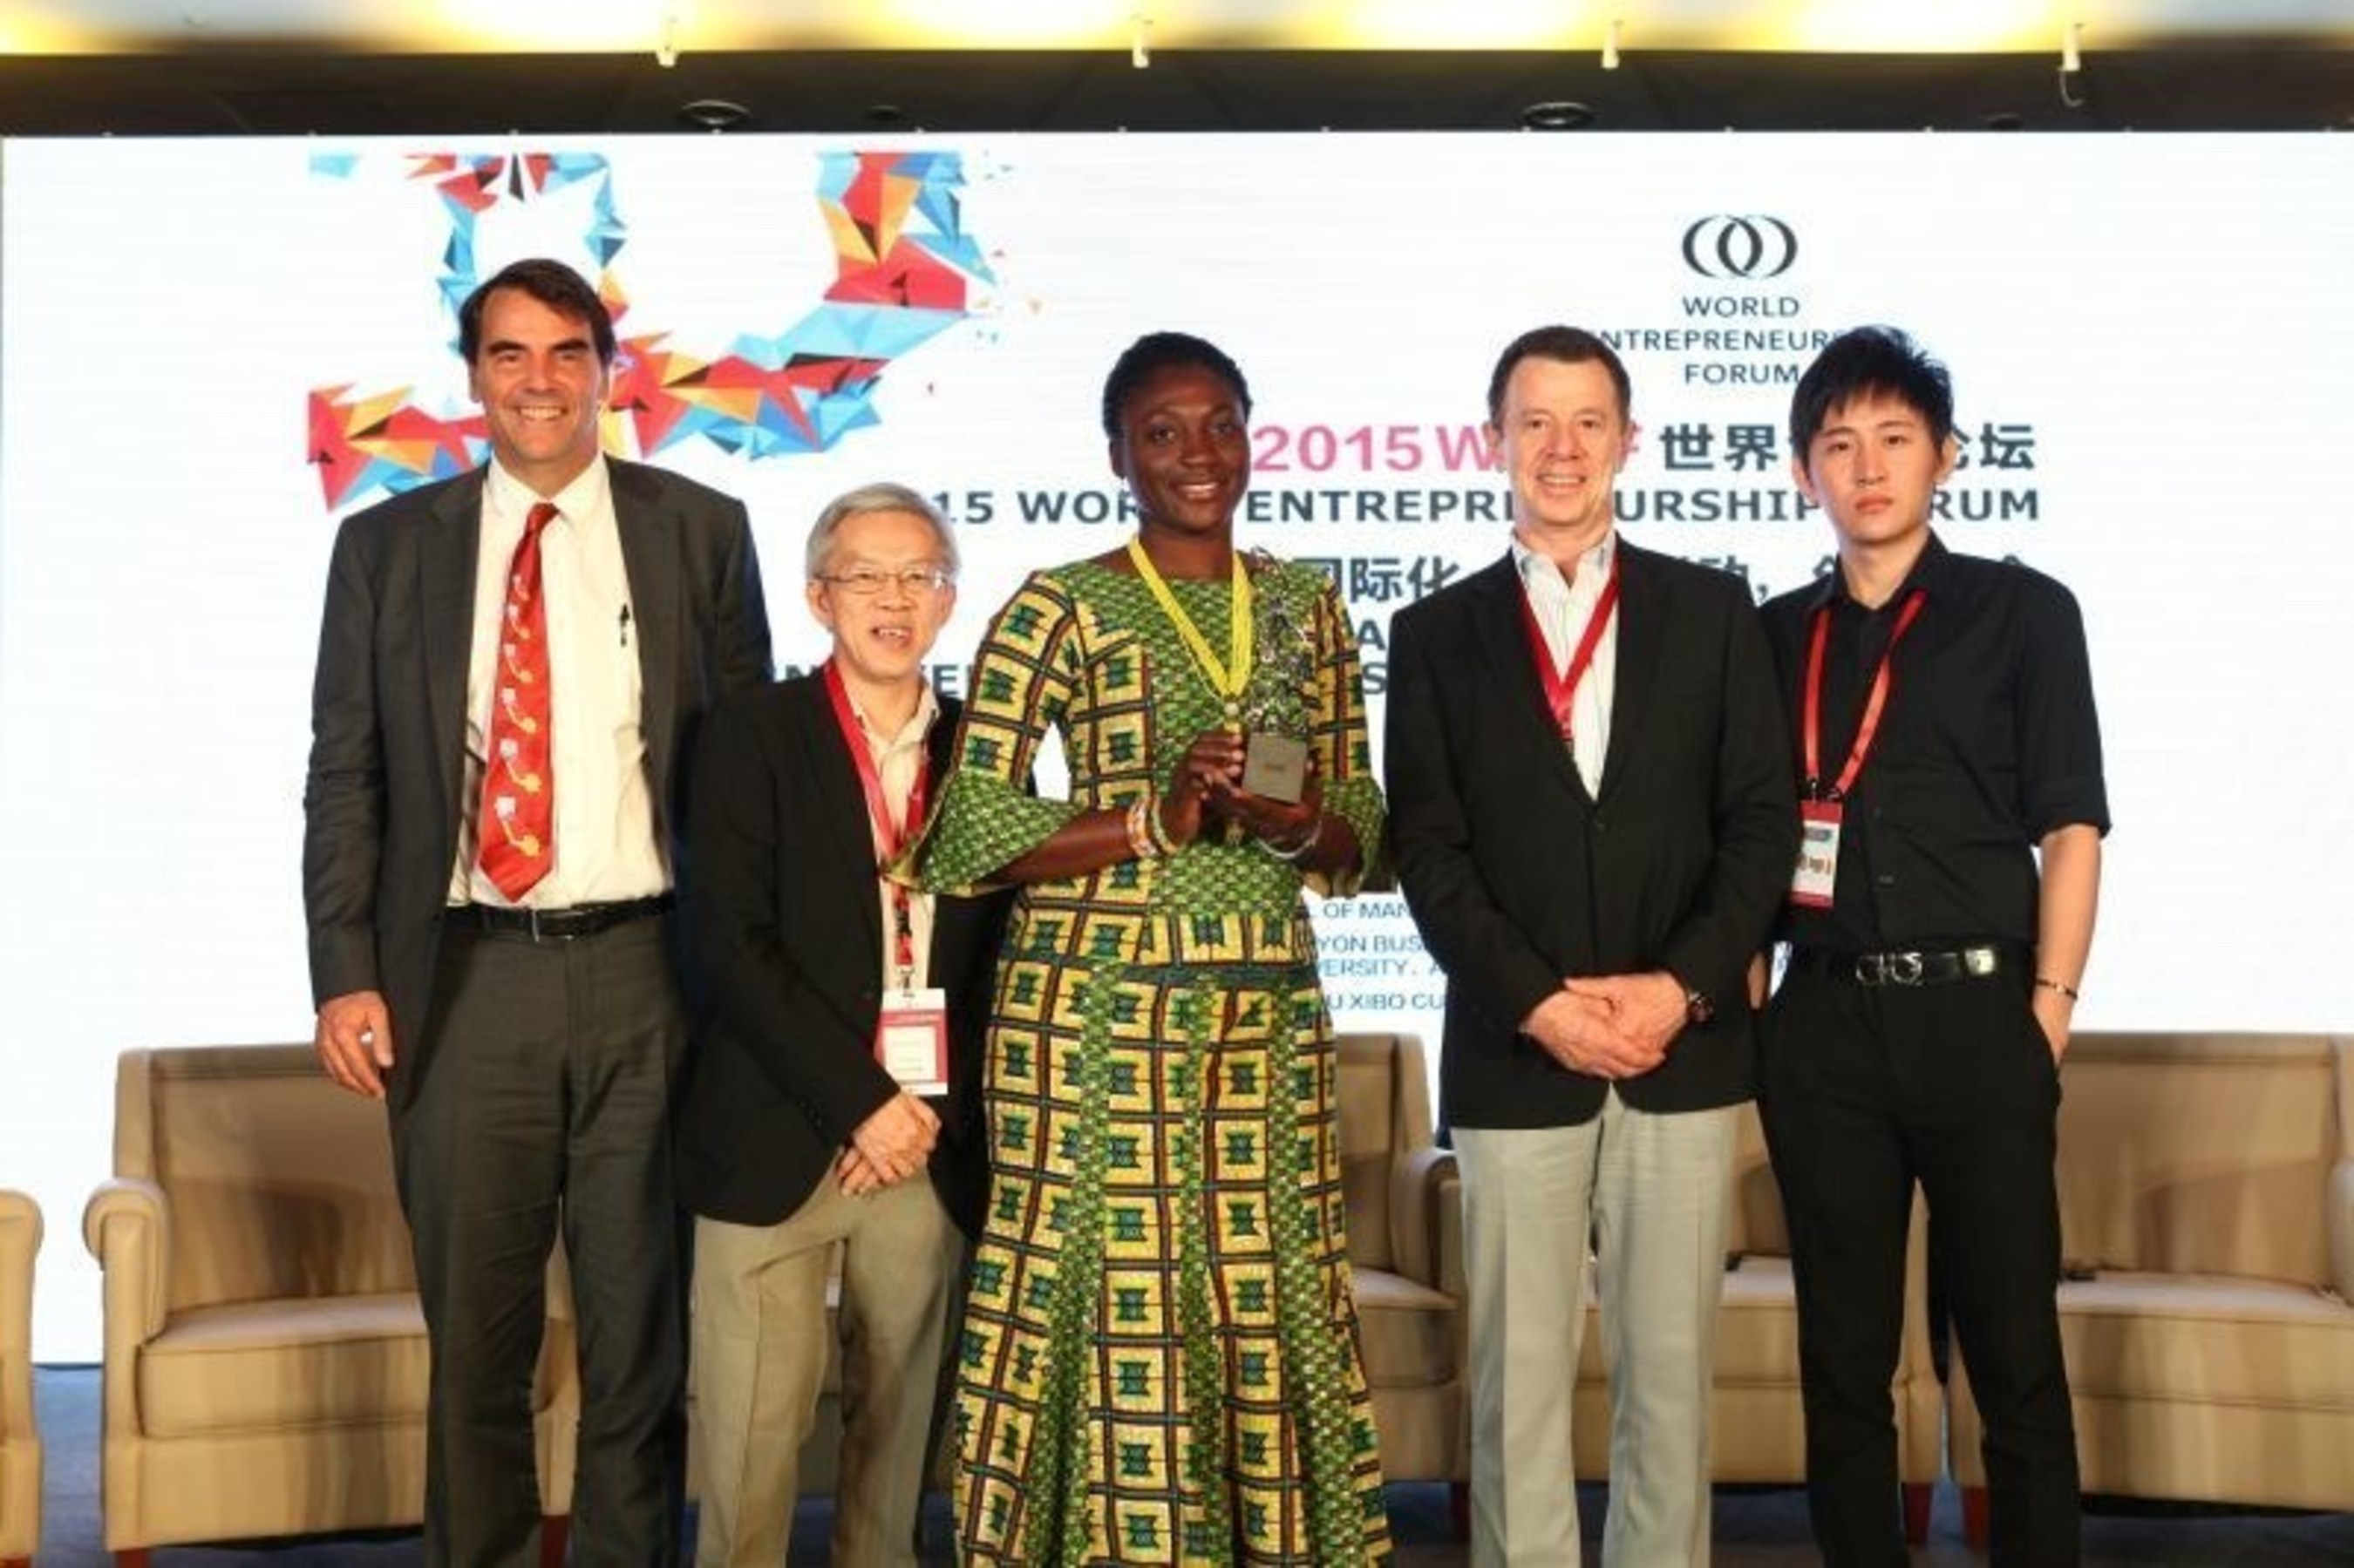 World Entrepreneurship Forum's 2015 Awardees From left to right :Timothy Draper (USA), Prof. Wong Poh Kam (Singapore), Bernice Dapaah (Ghana), Francesco Piazzesi Tommasi (Mexico), Mao Jingxiang (China) (PRNewsFoto/World Entrepreneurship Forum) (PRNewsFoto/World Entrepreneurship Forum)